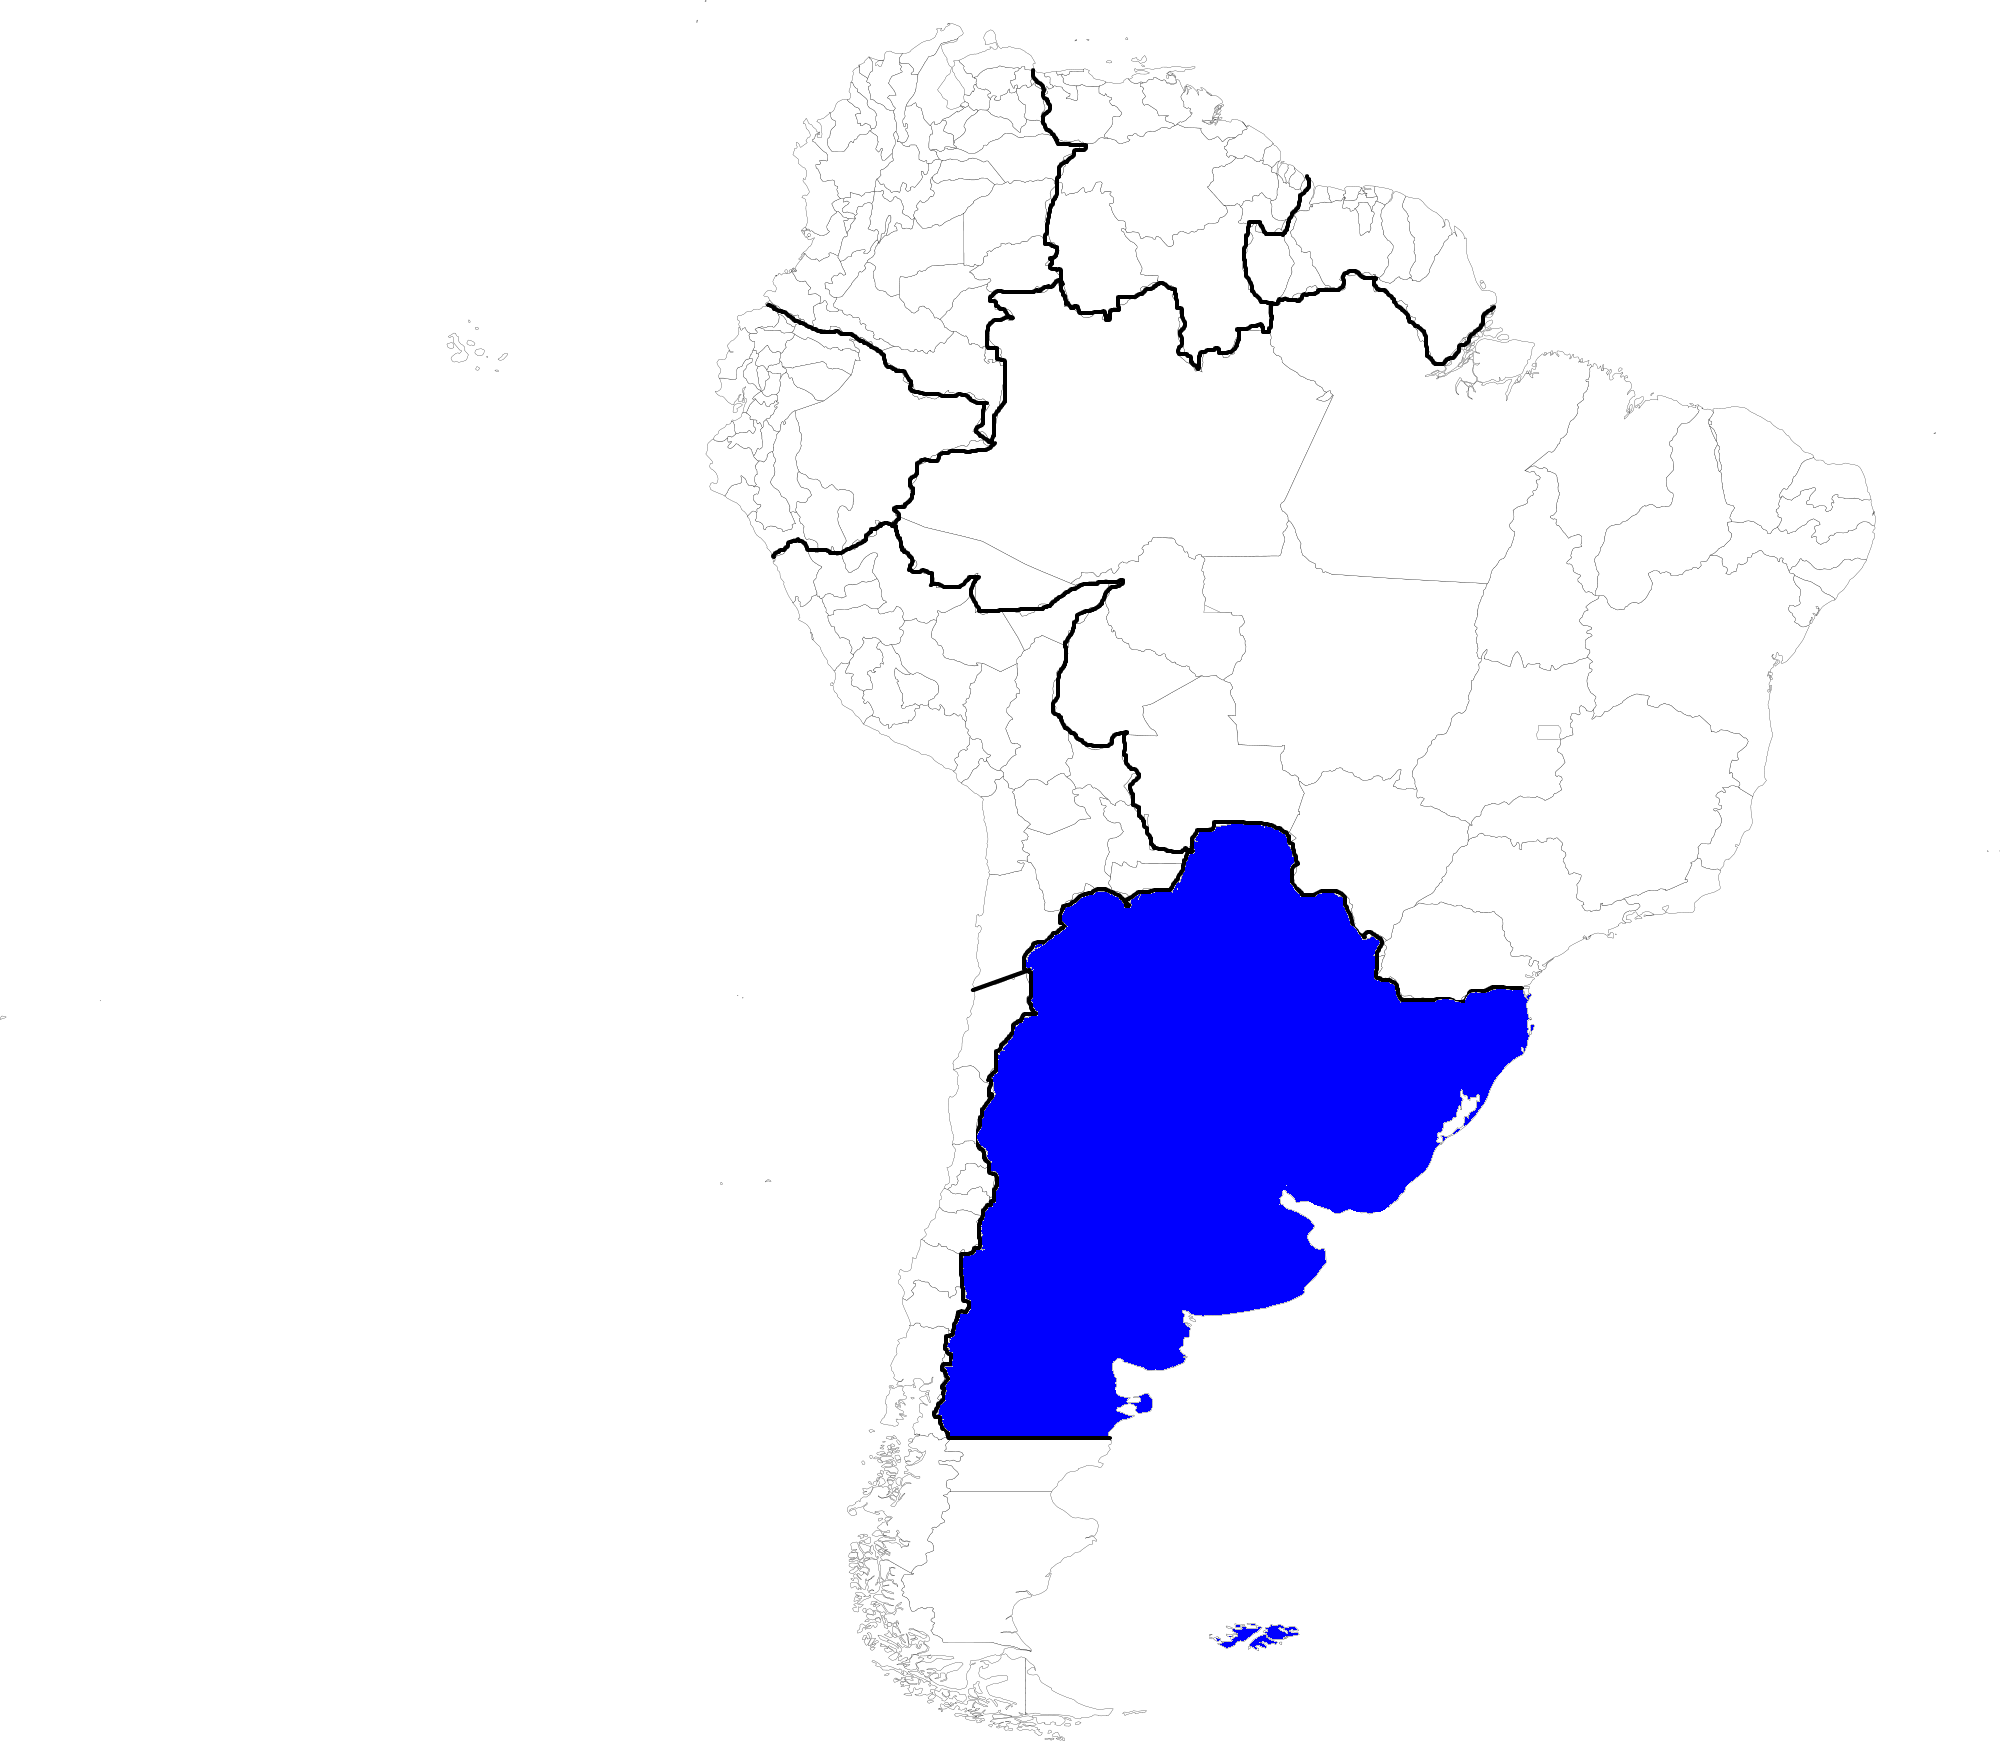 File:Mapa Estados Unidos del Plata.png - Wikipedia